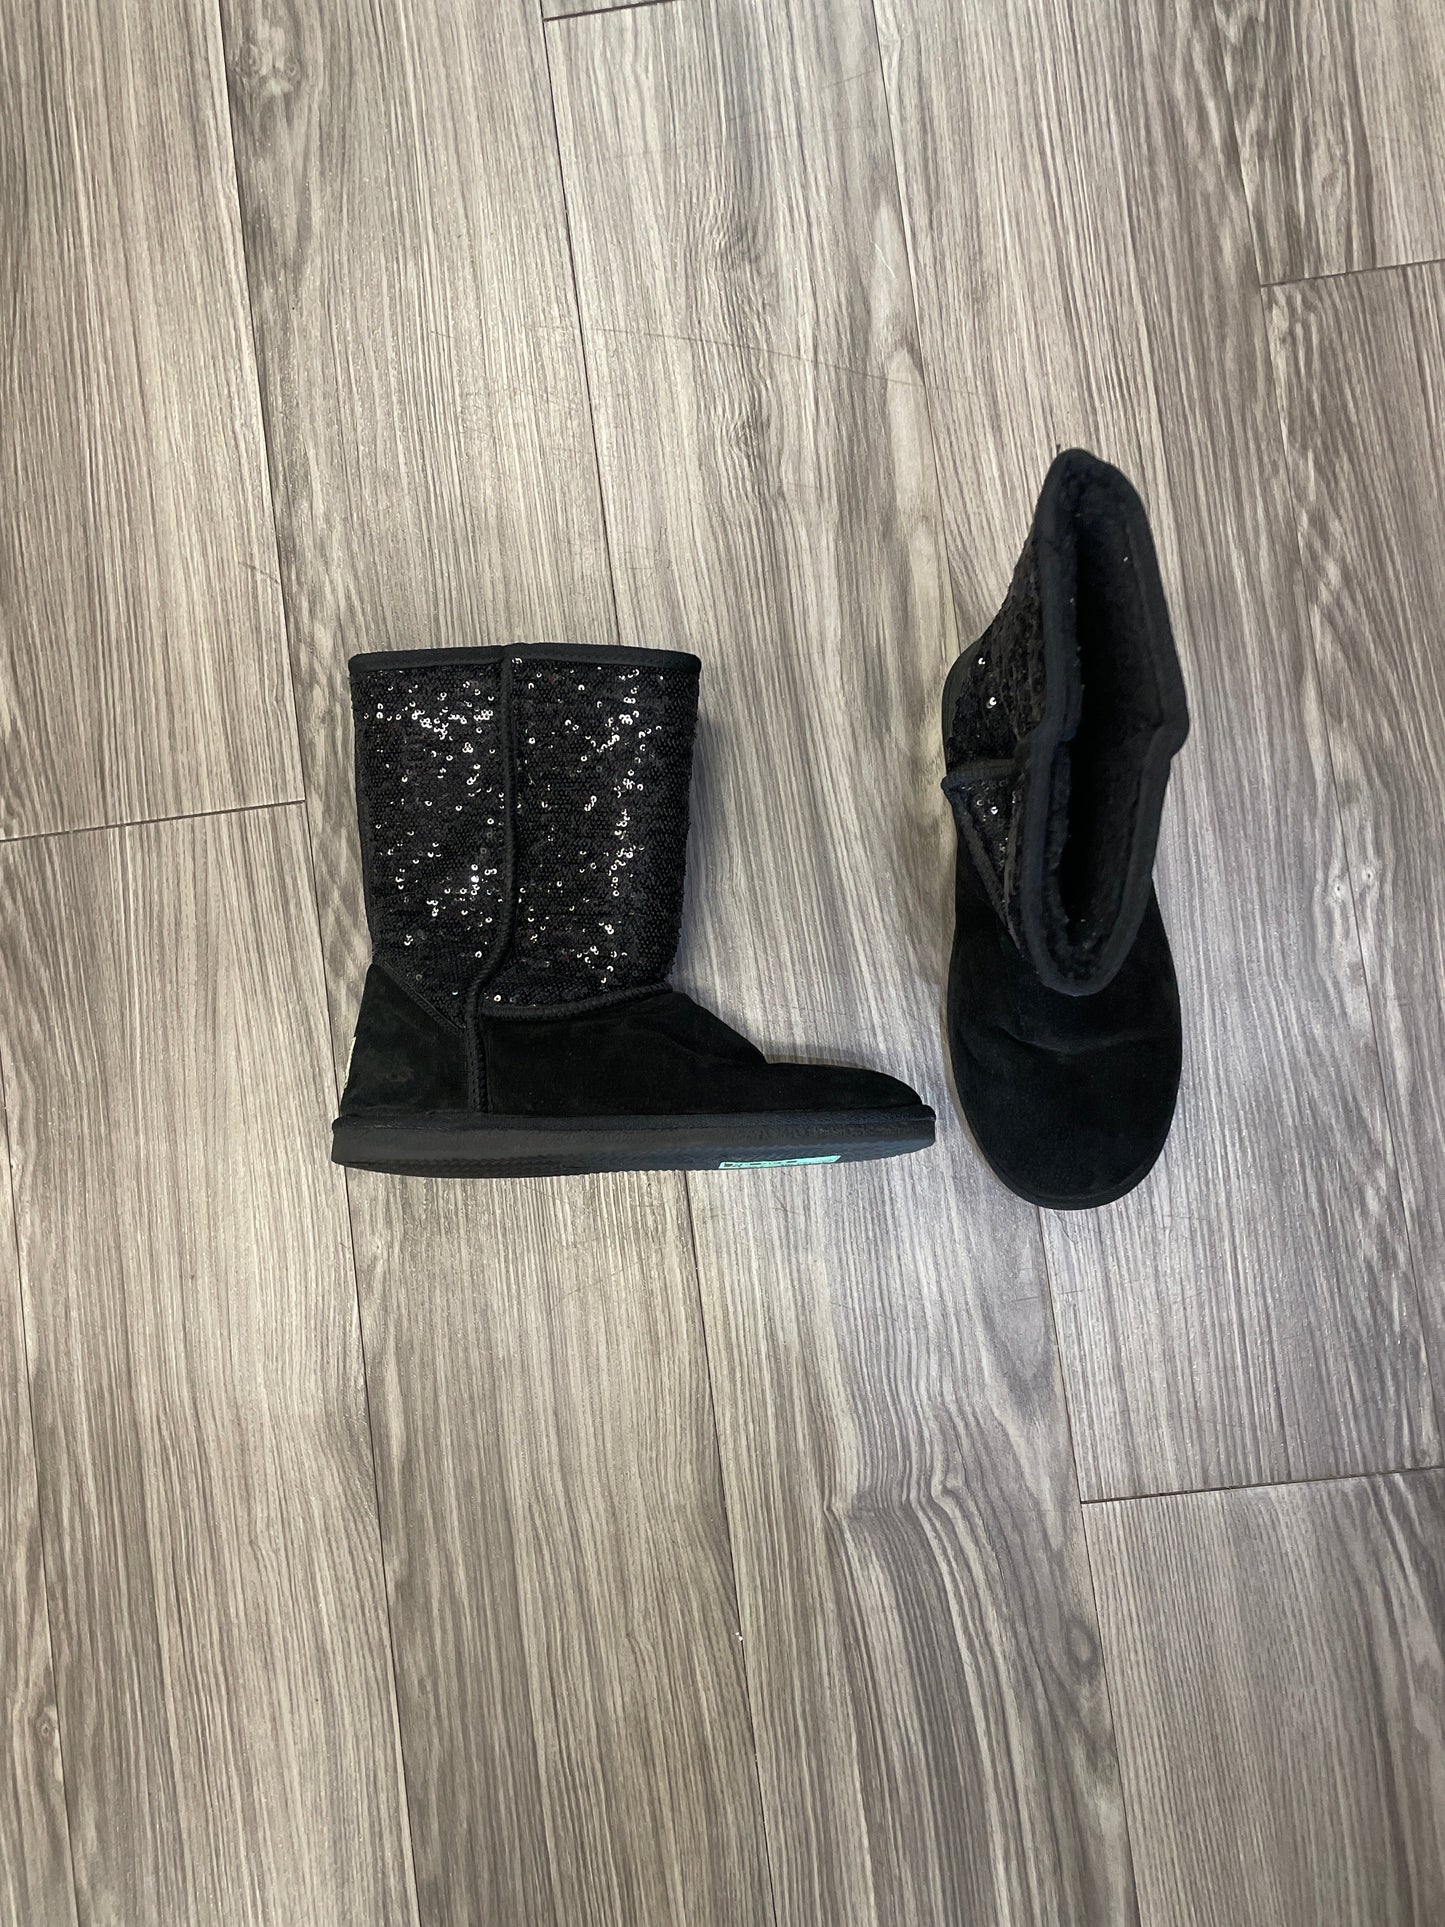 Black Boots Snow Lamo, Size 11